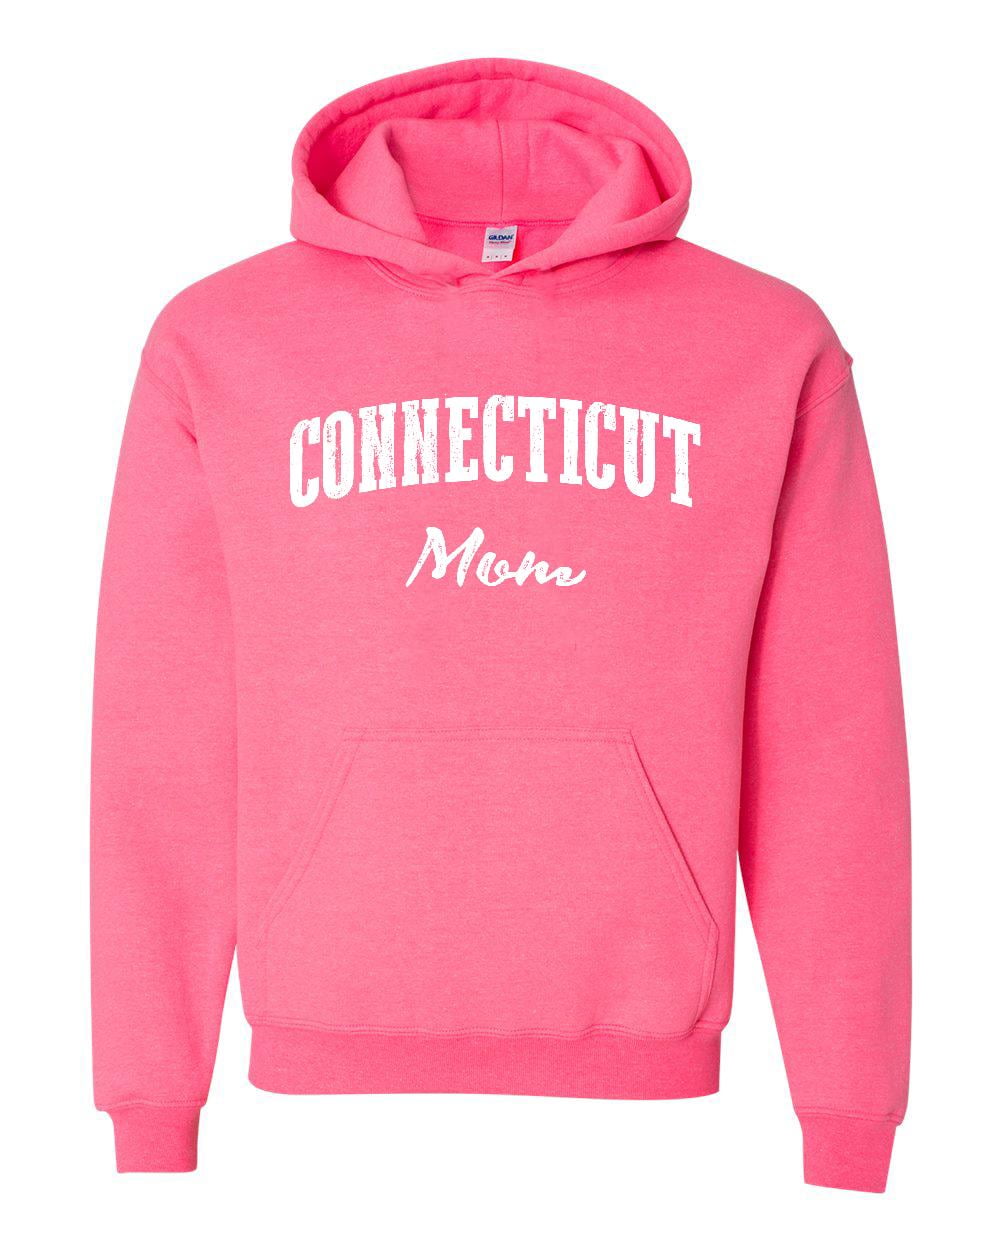 Unisex Connecticut Mom Hoodie Sweatshirt - Walmart.com